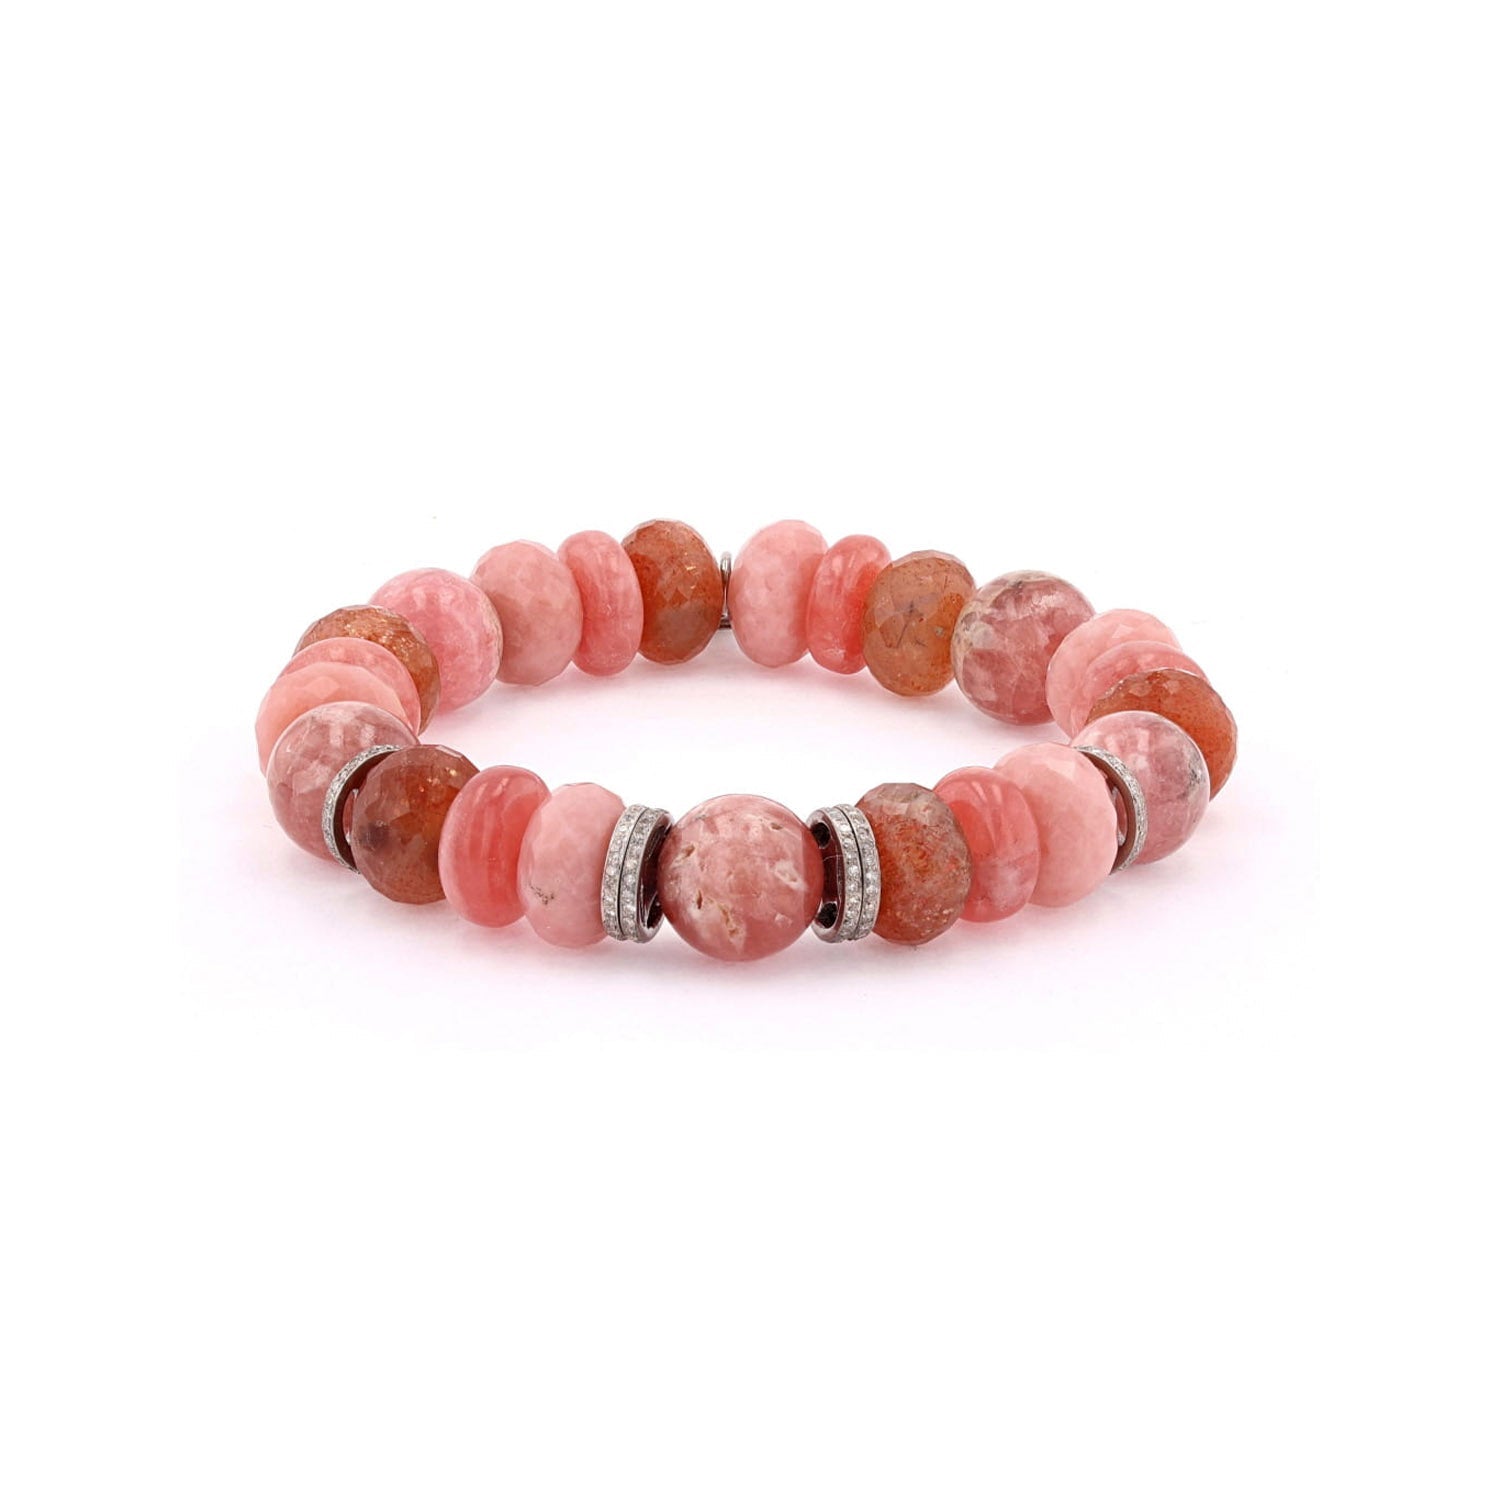 Organic Pink Gemstone Mix Bracelet with Diamond Rondelles - 12mm Designed and handmade in California - TBird